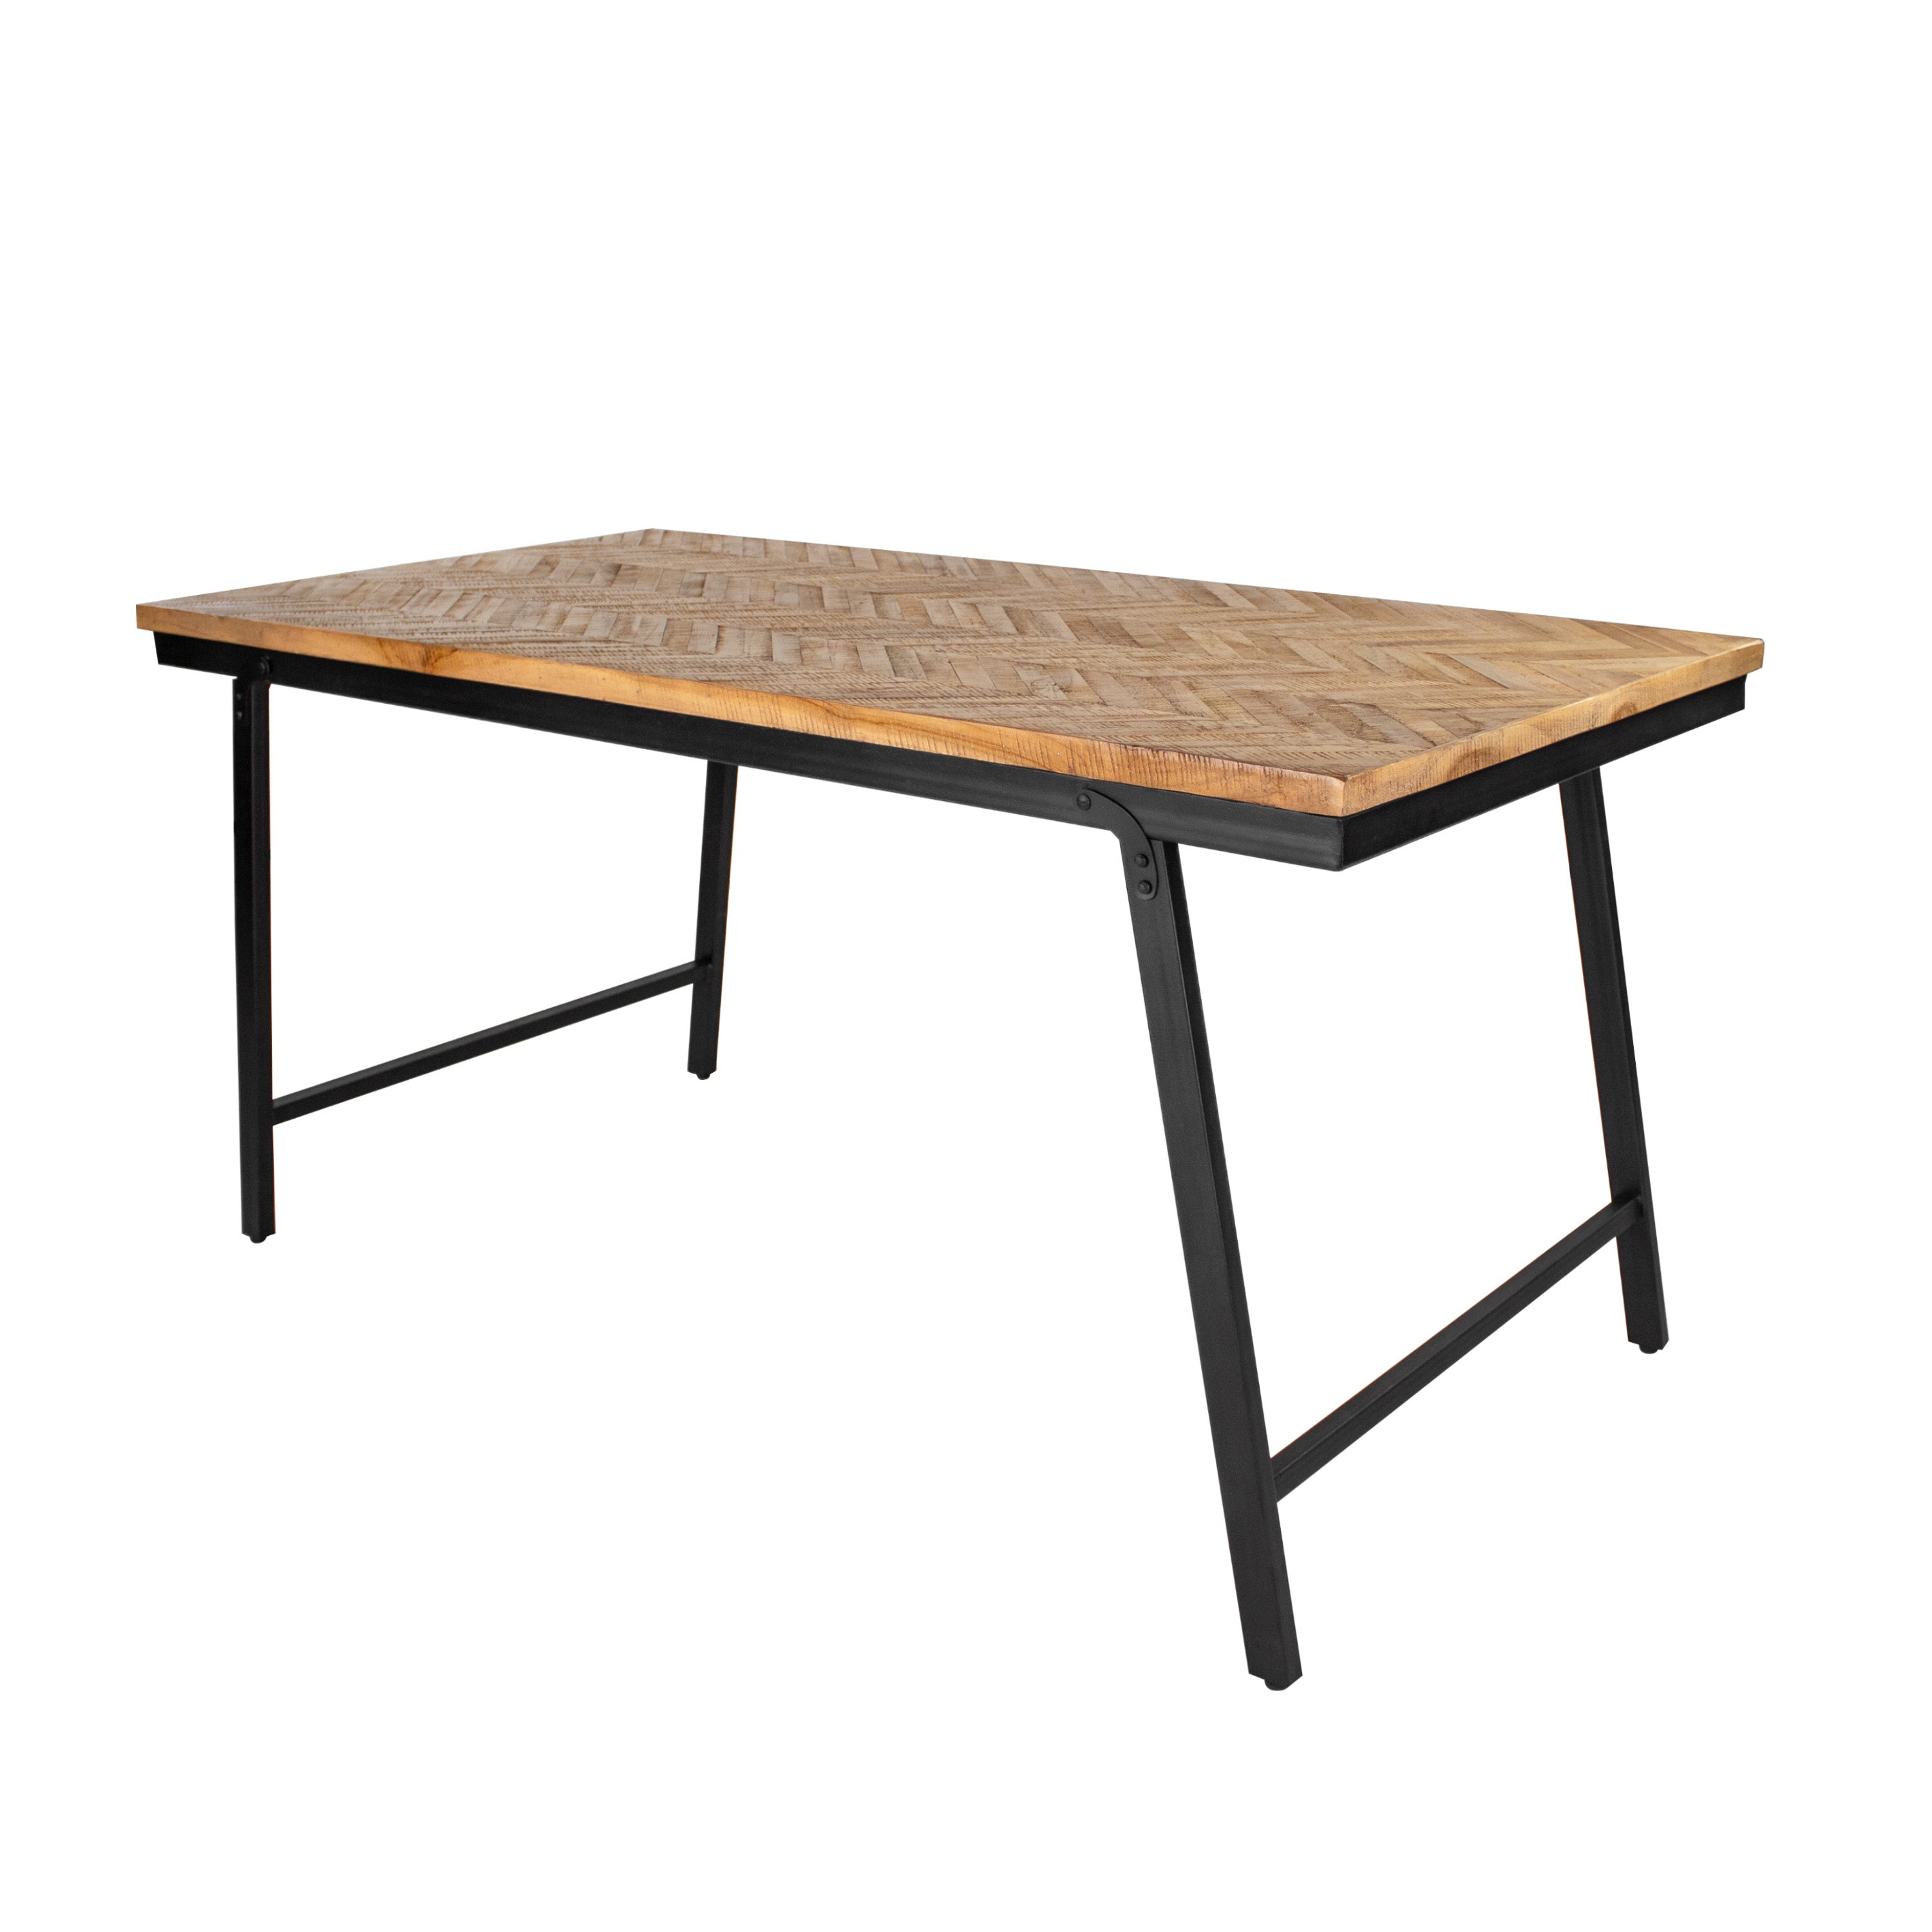 Kick dining table Ivan - 160cm